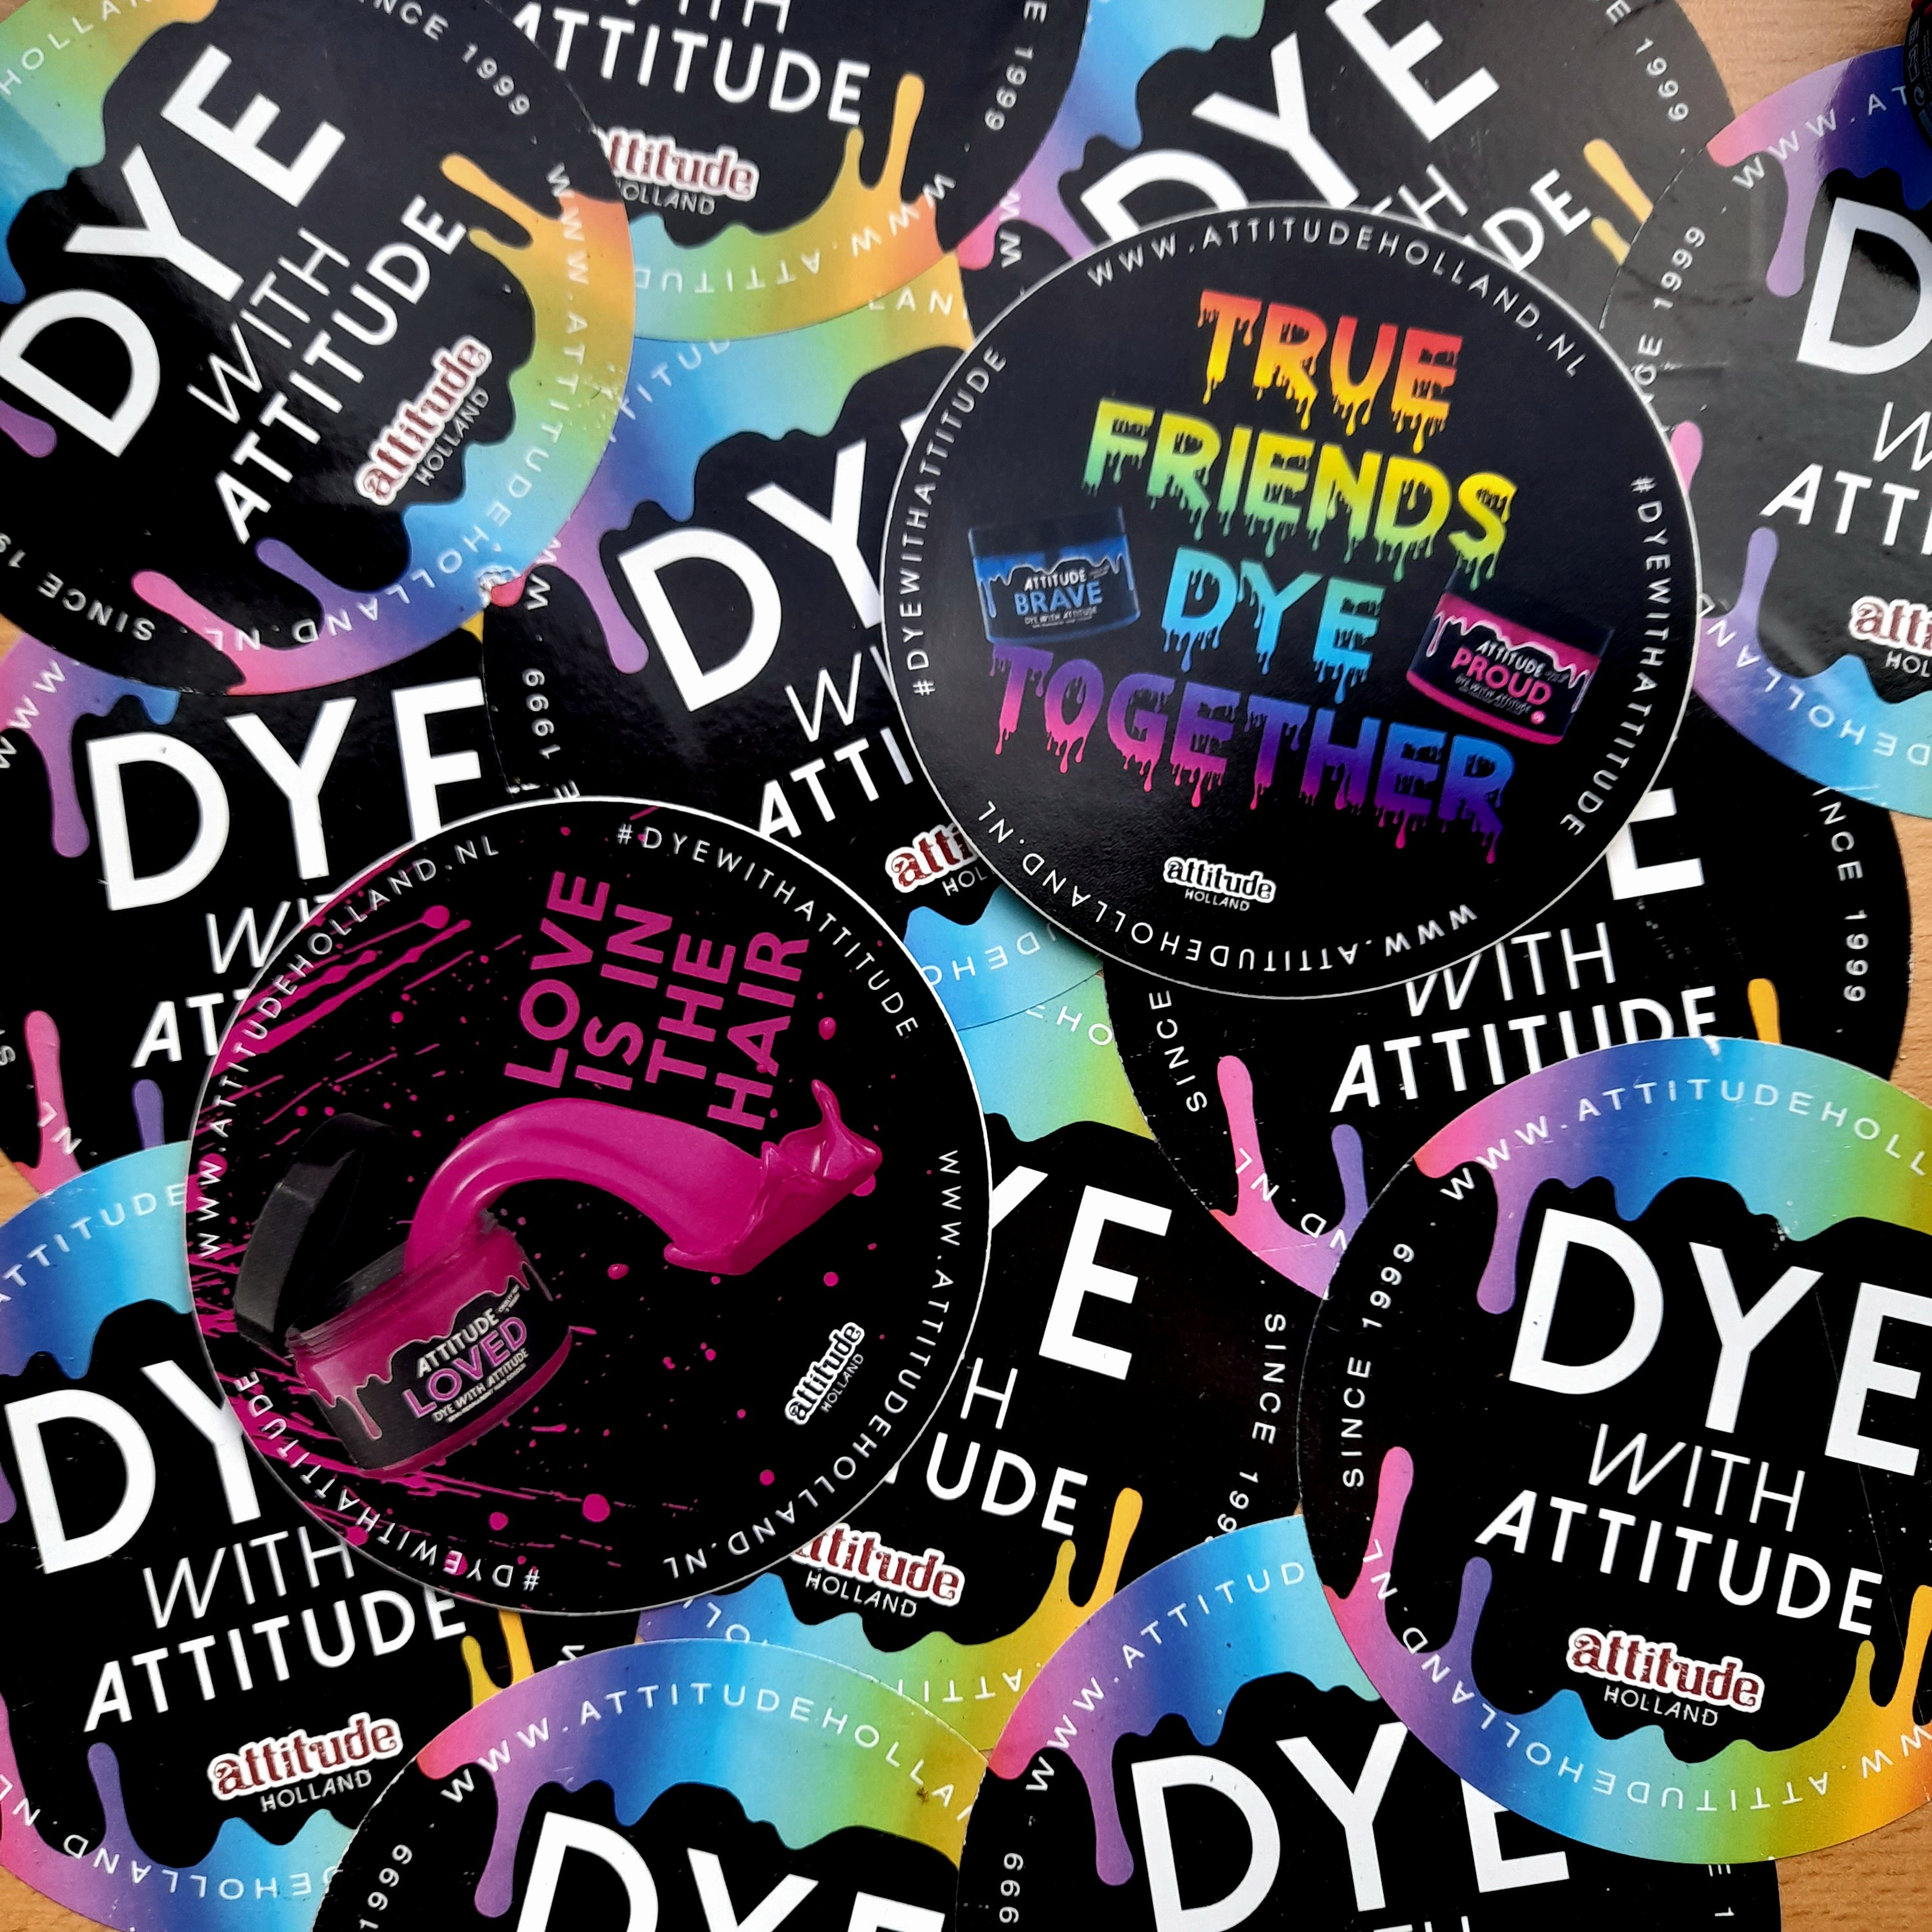 Design Dye with Attitude Stickers!